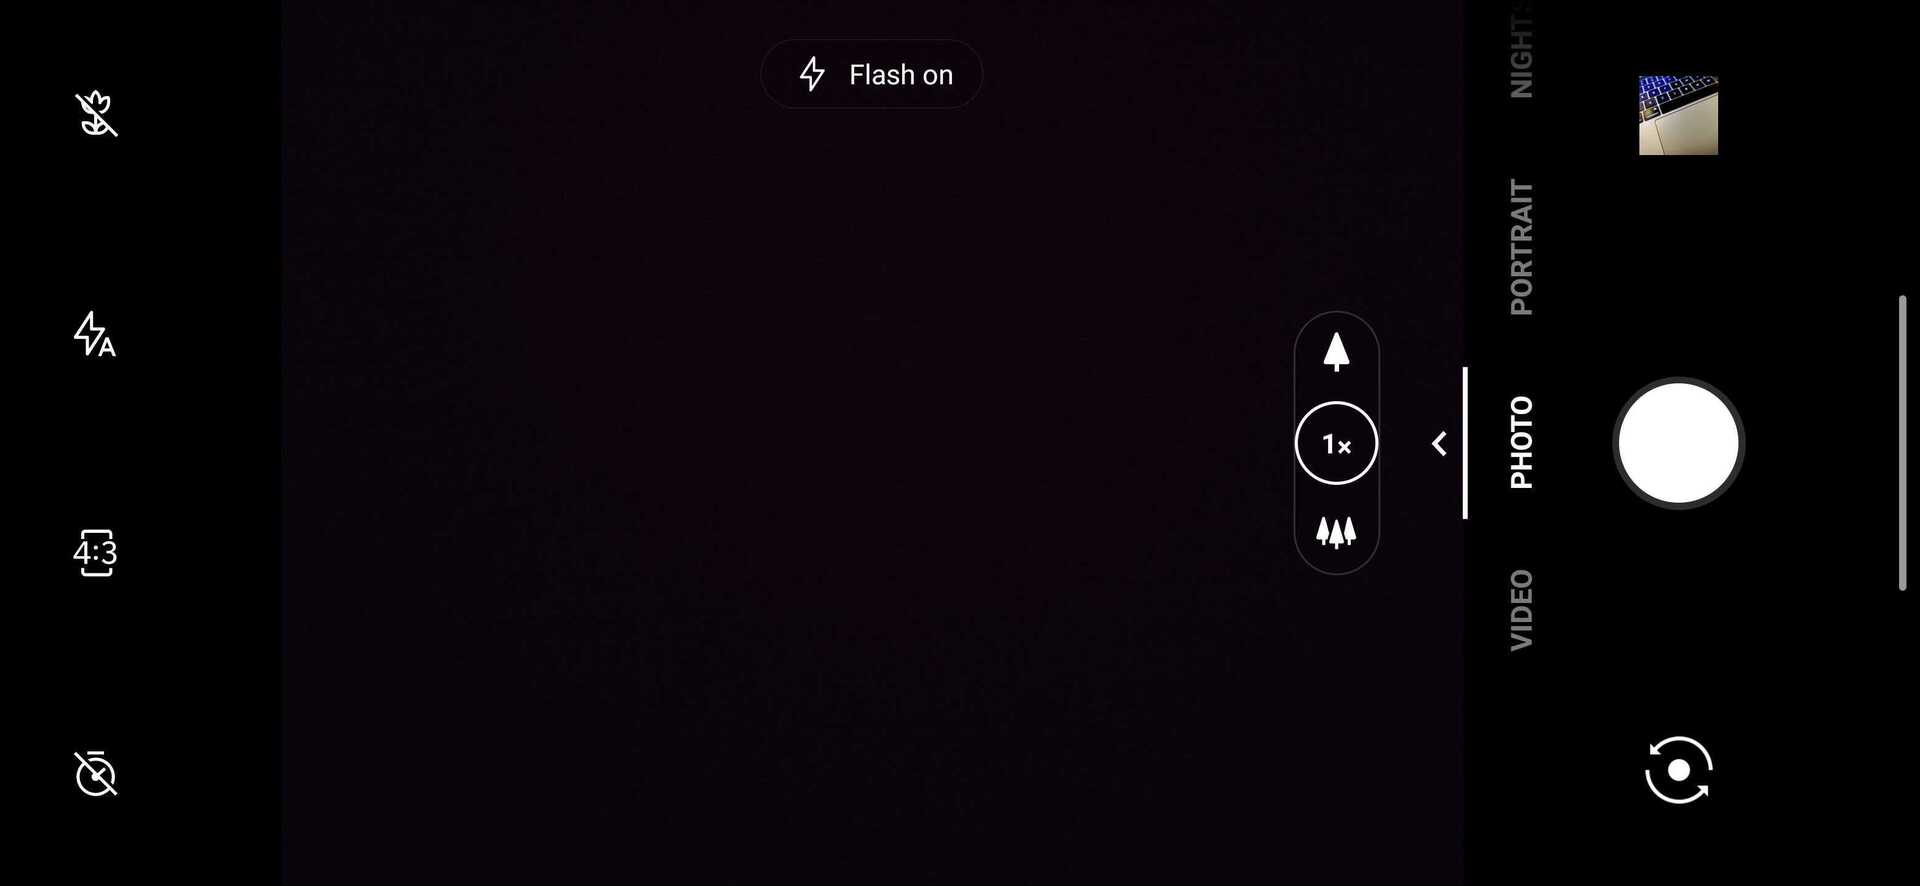 OnePlus 7T Pro camera interface